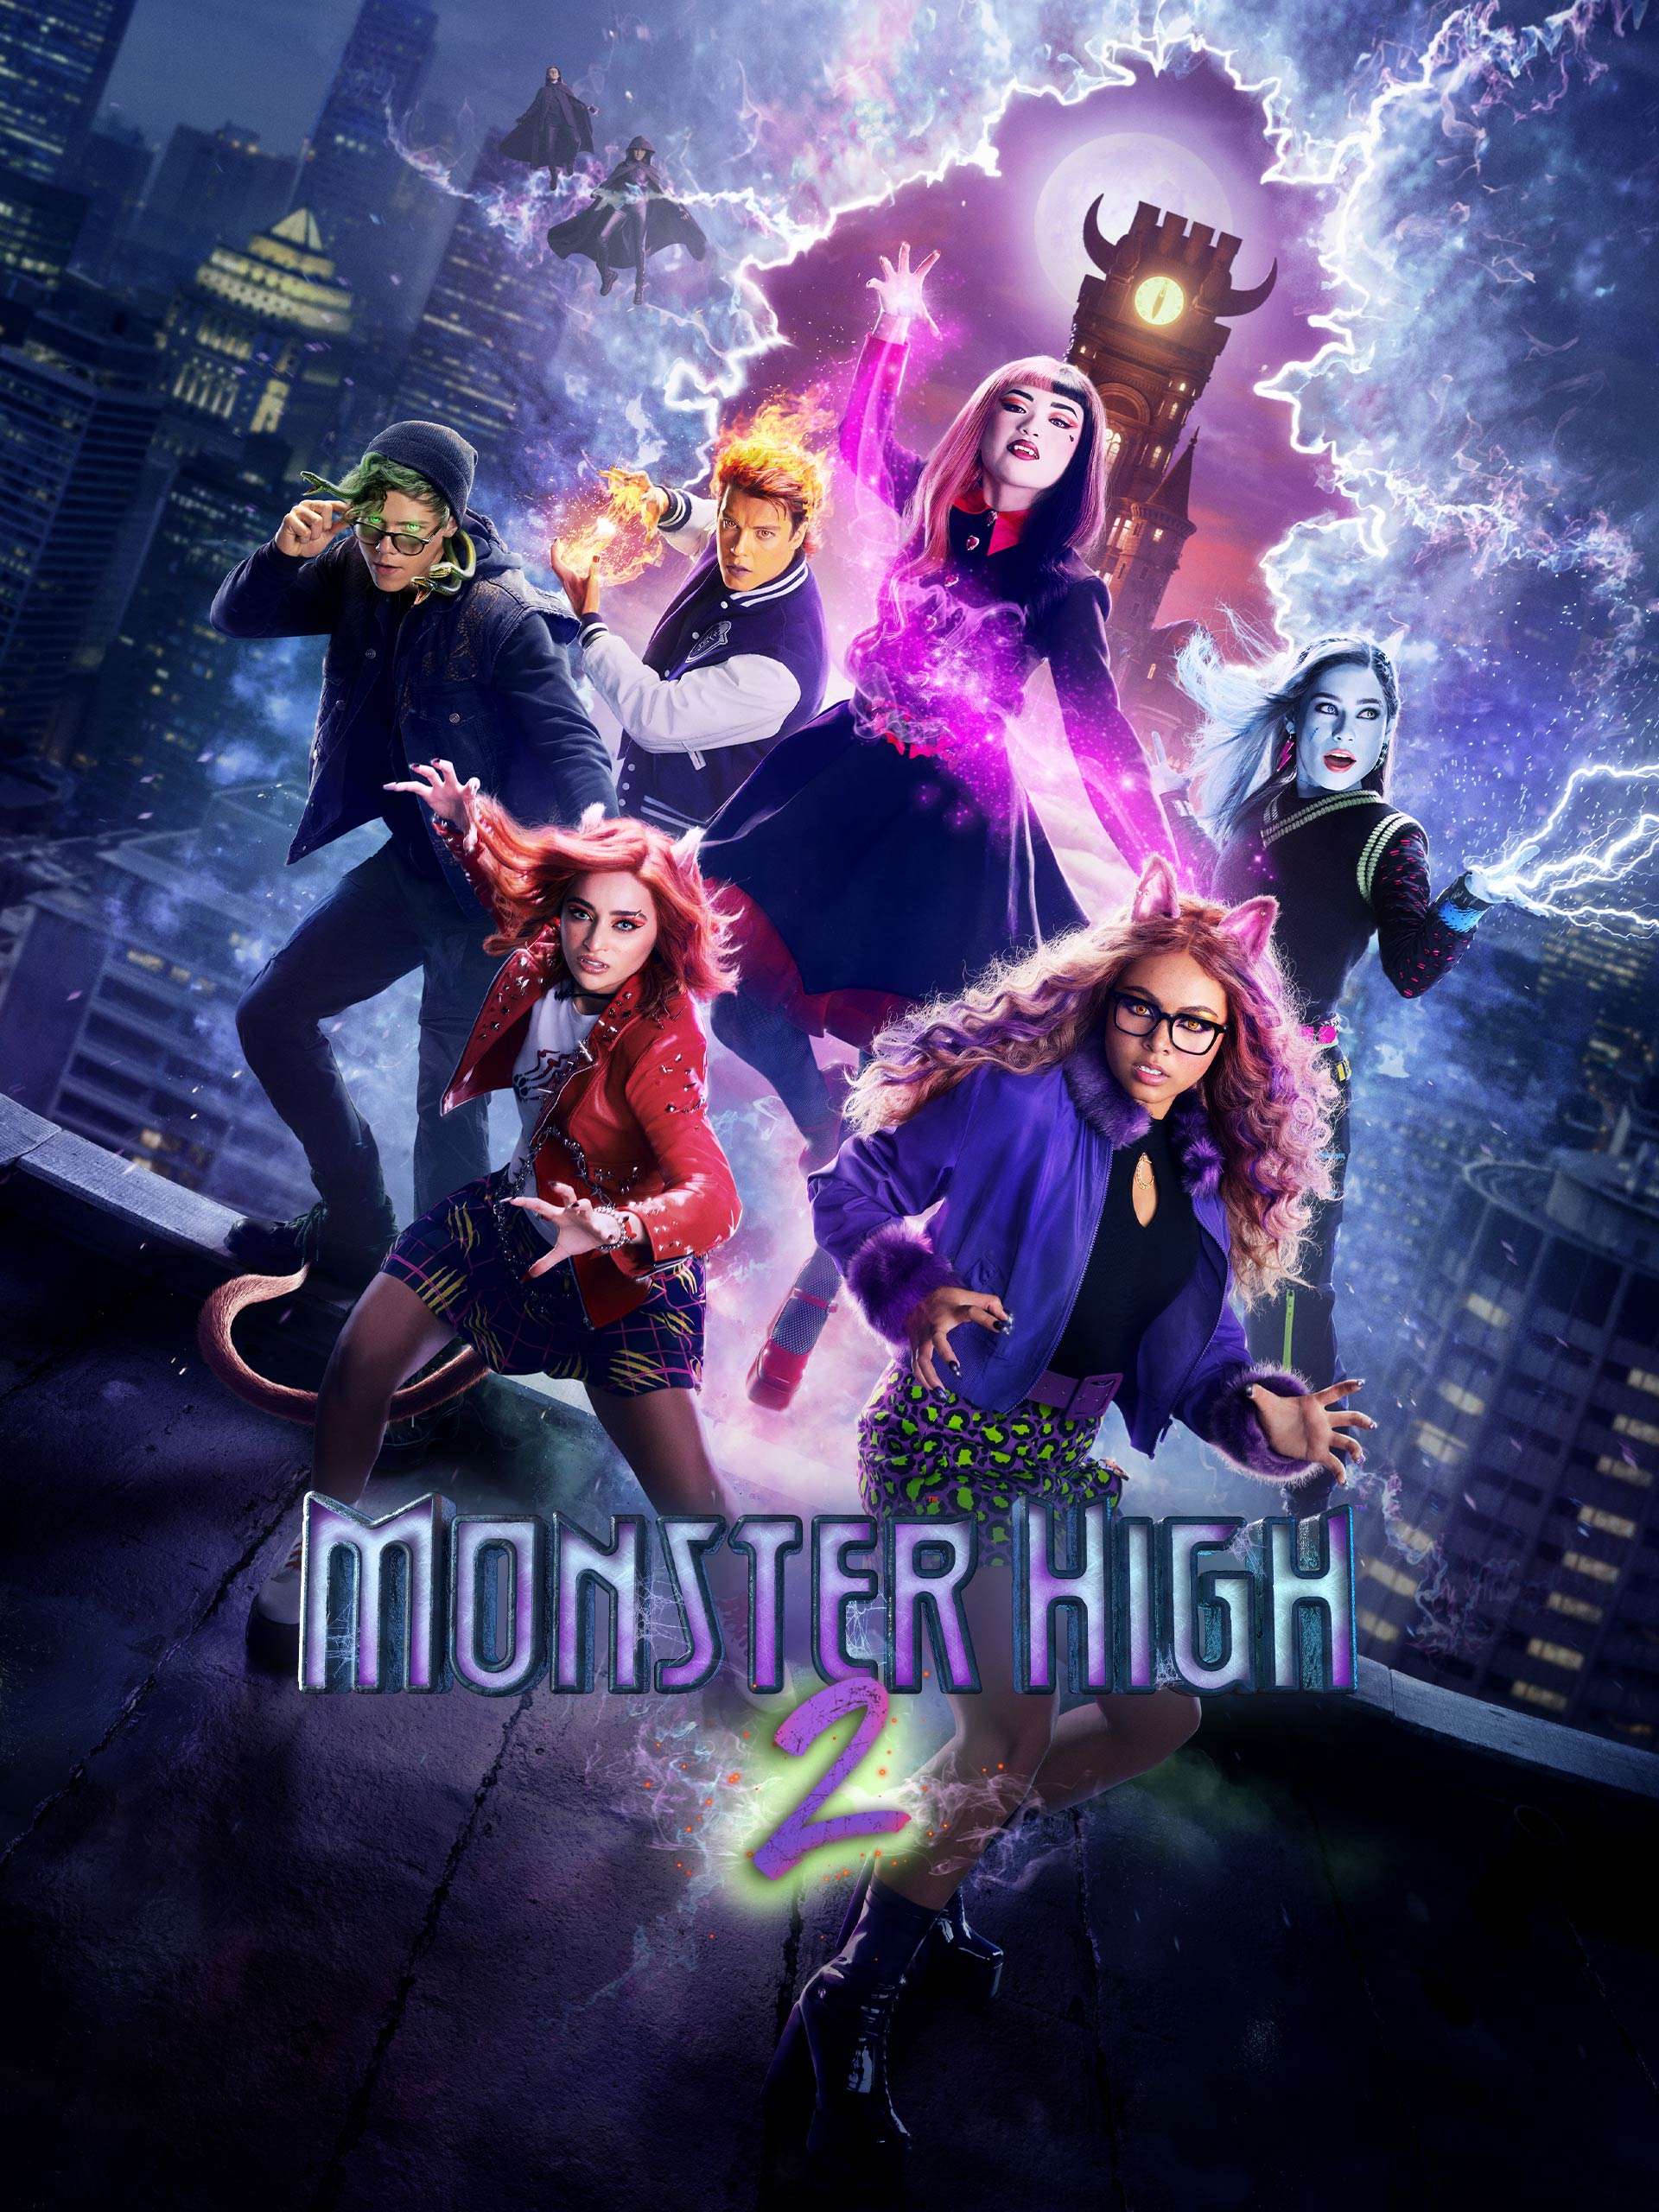 Monster High 2 2023 WEB DL 1080p E AC3 AC3 ITA ENG SUB LFi mkv